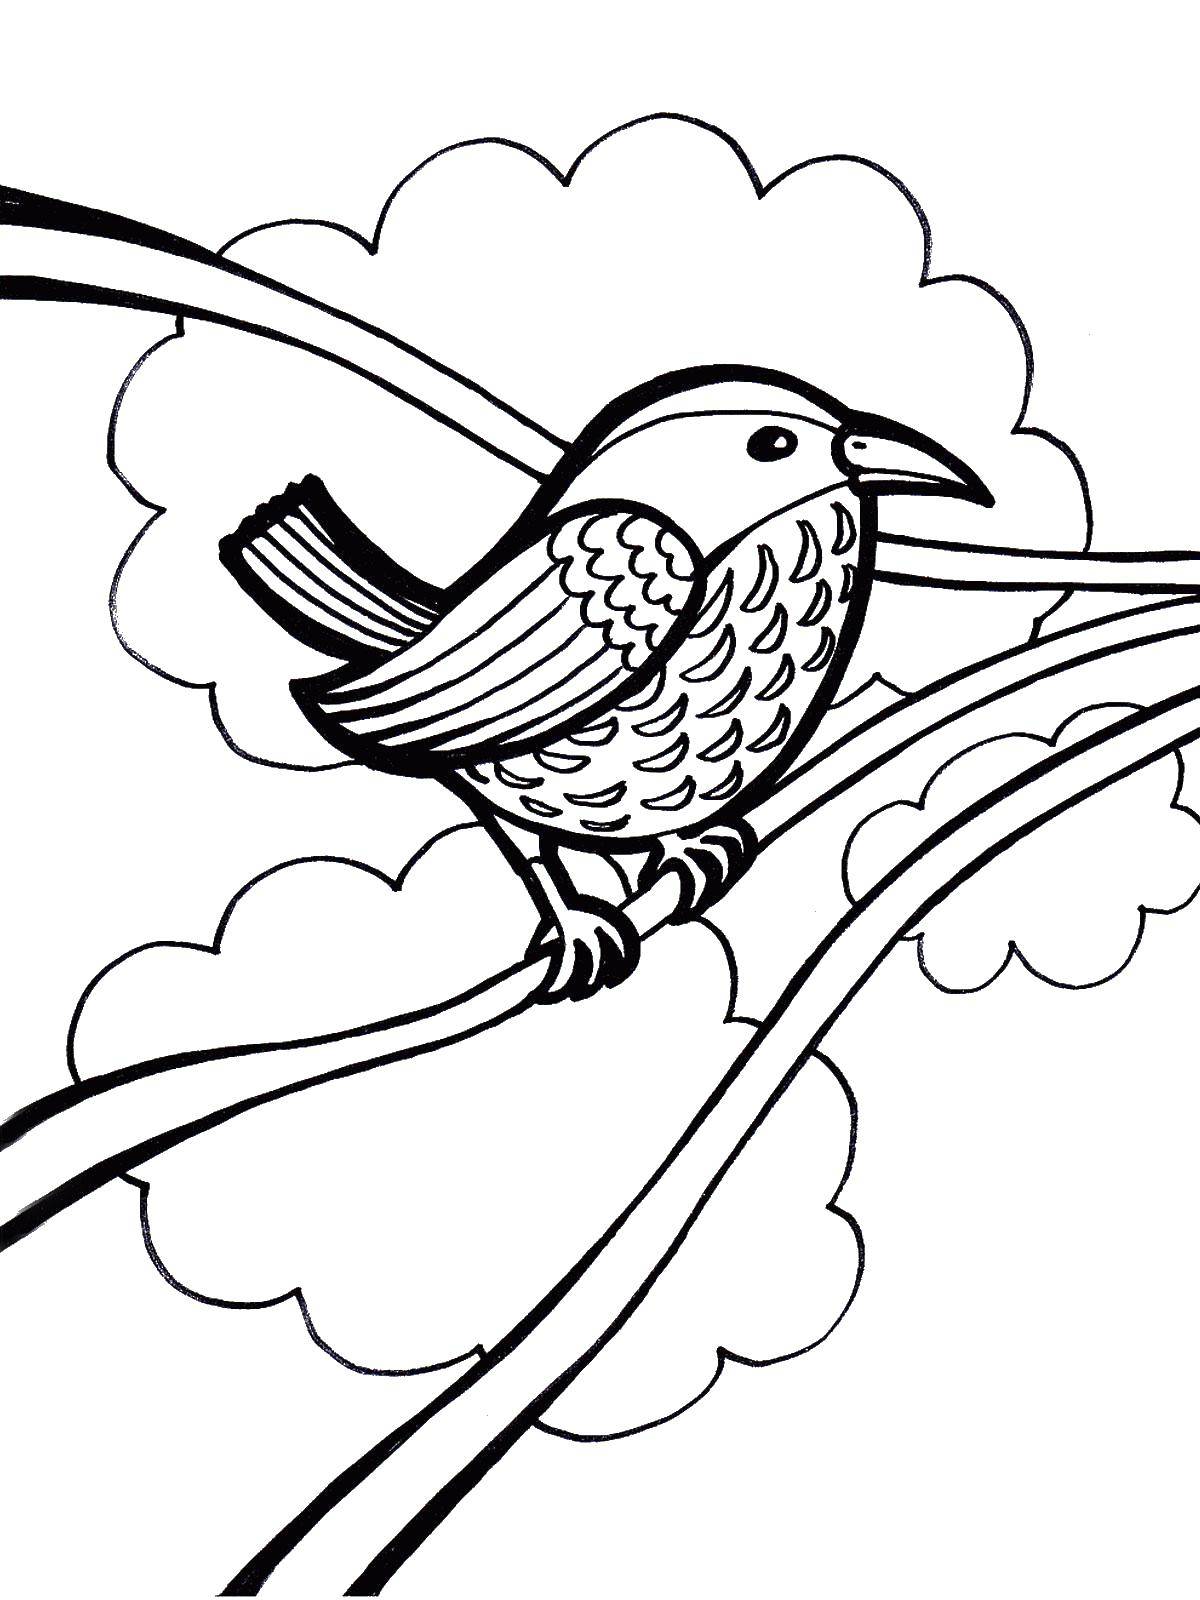 Coloring Bird on a tree. Category birds. Tags:  bird.